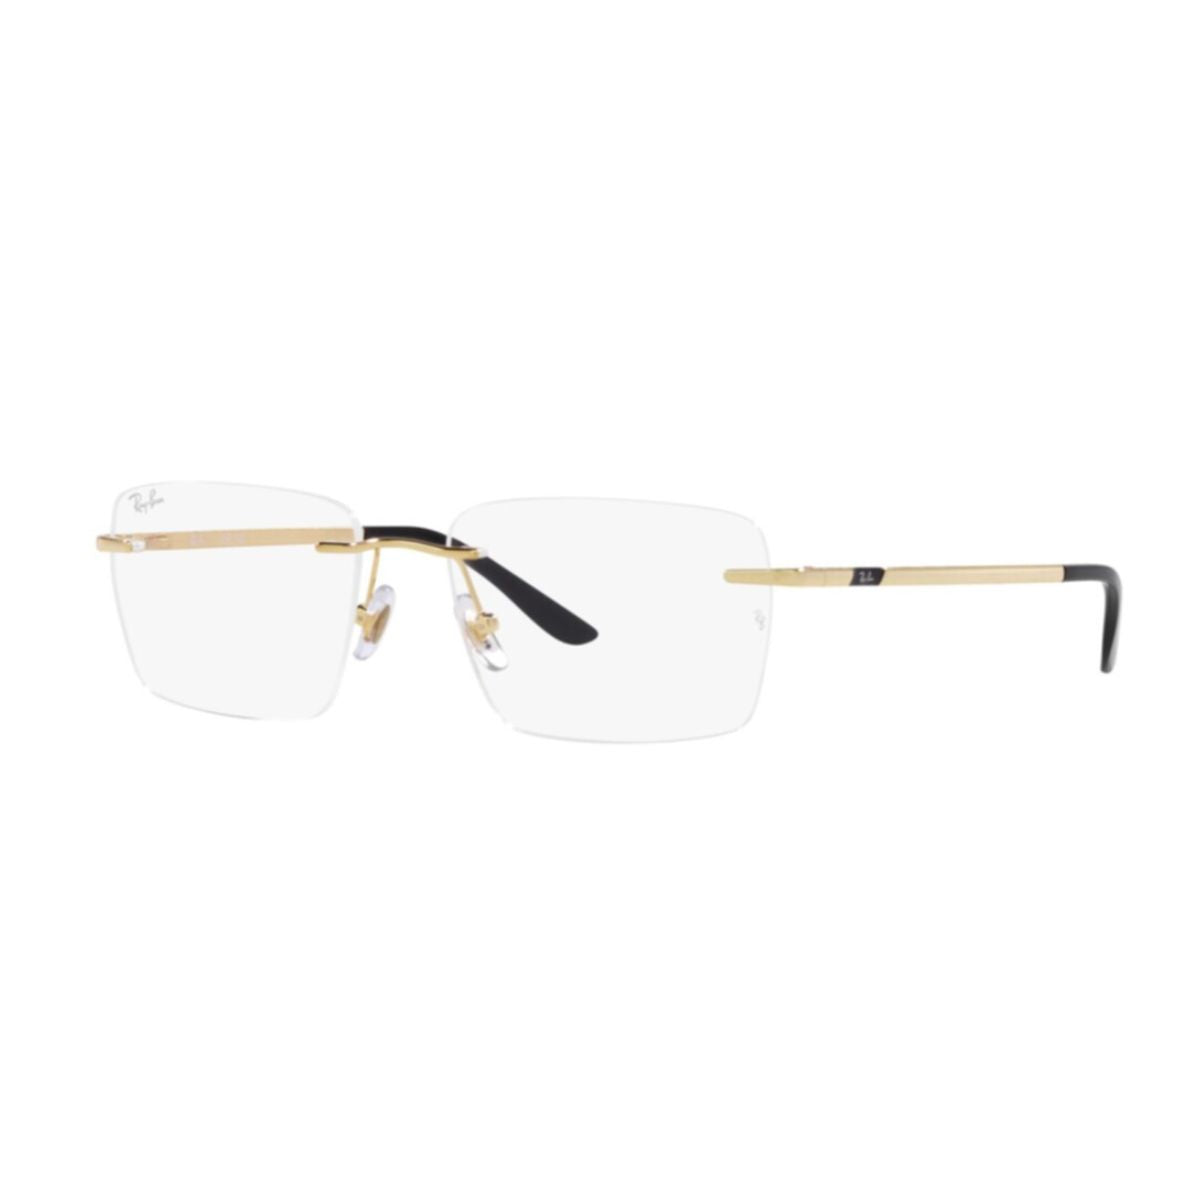 "Rayban 6506I 2500 optical eyewear glasses frame for men's and women's at optorium"